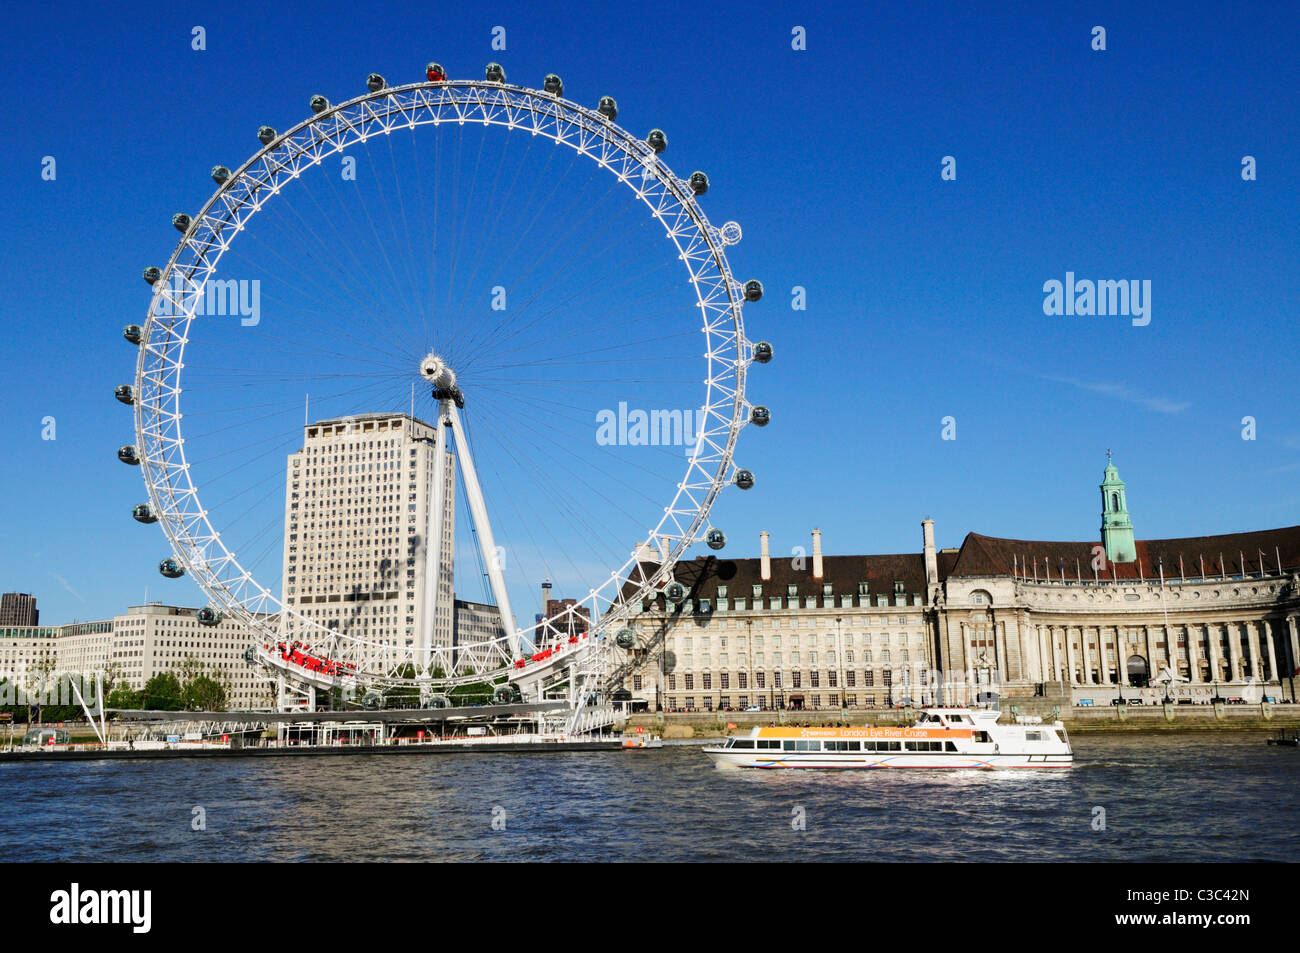 A Tourist Sightseeing  Cruise Boat at The London Eye, London, England, UK Stock Photo